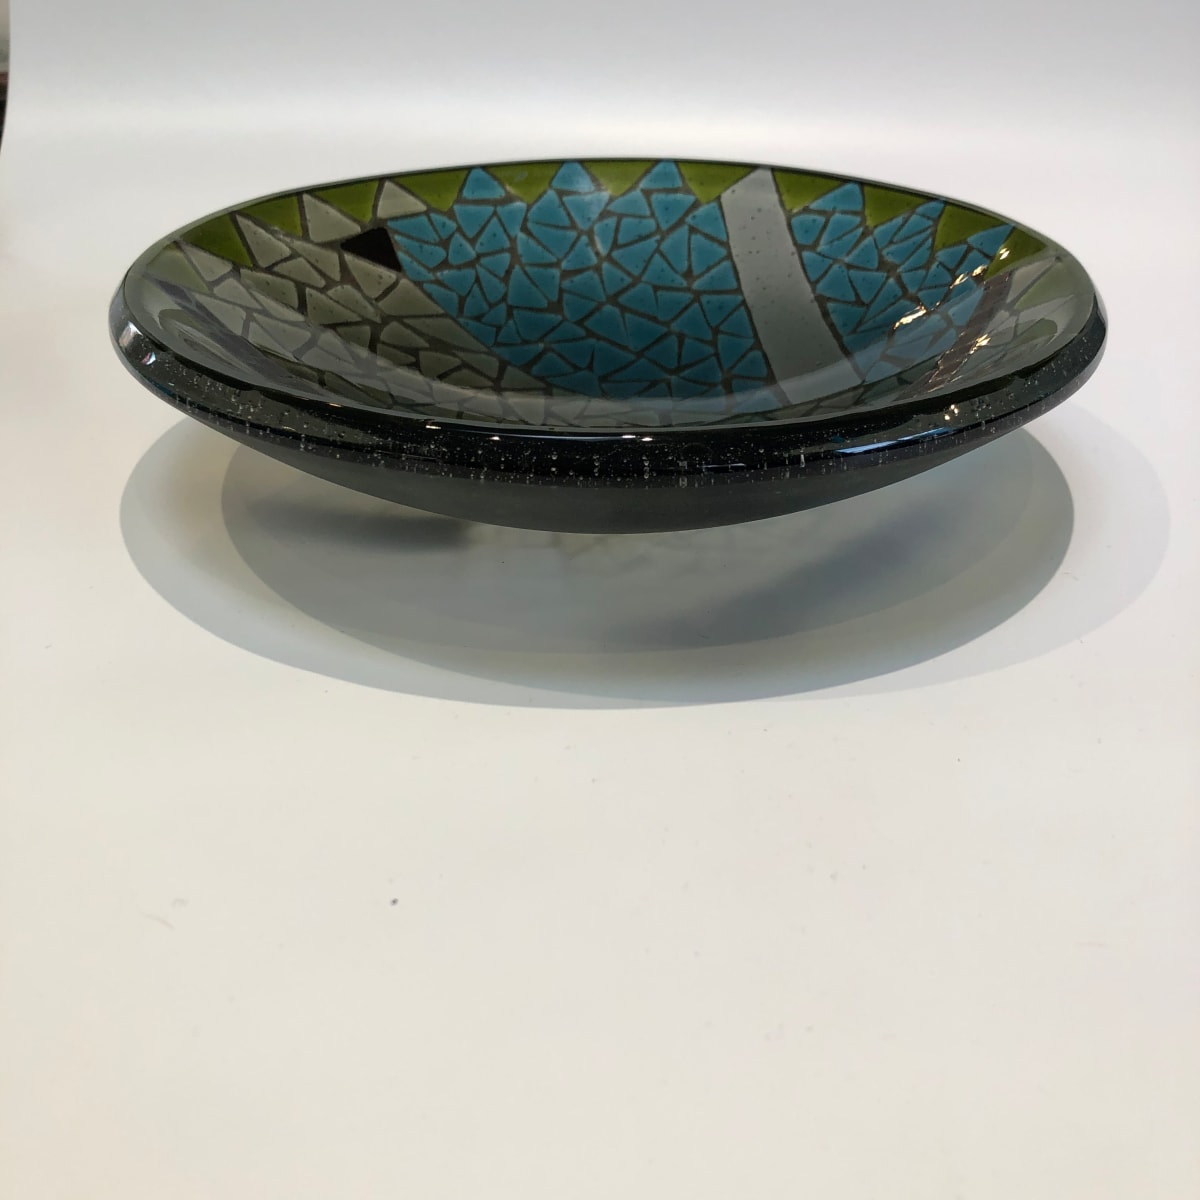 Mosaic Bowl by Nancy Gong  Image: Polished Kilnformed Glass Bowl $300.00